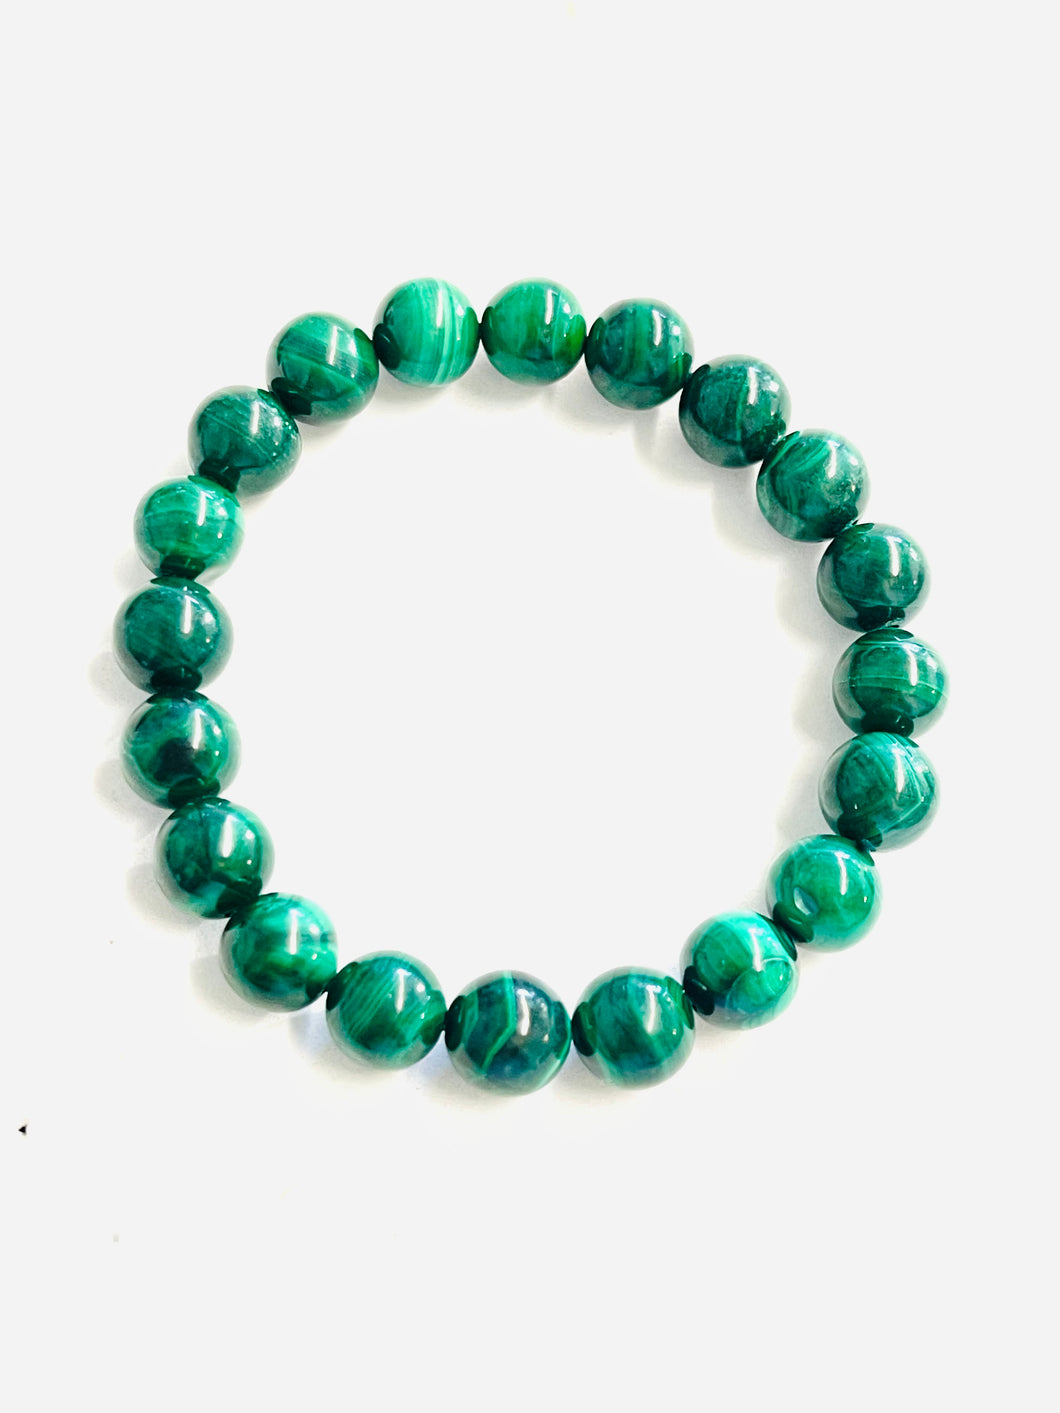 Bracelet with malachite  beads